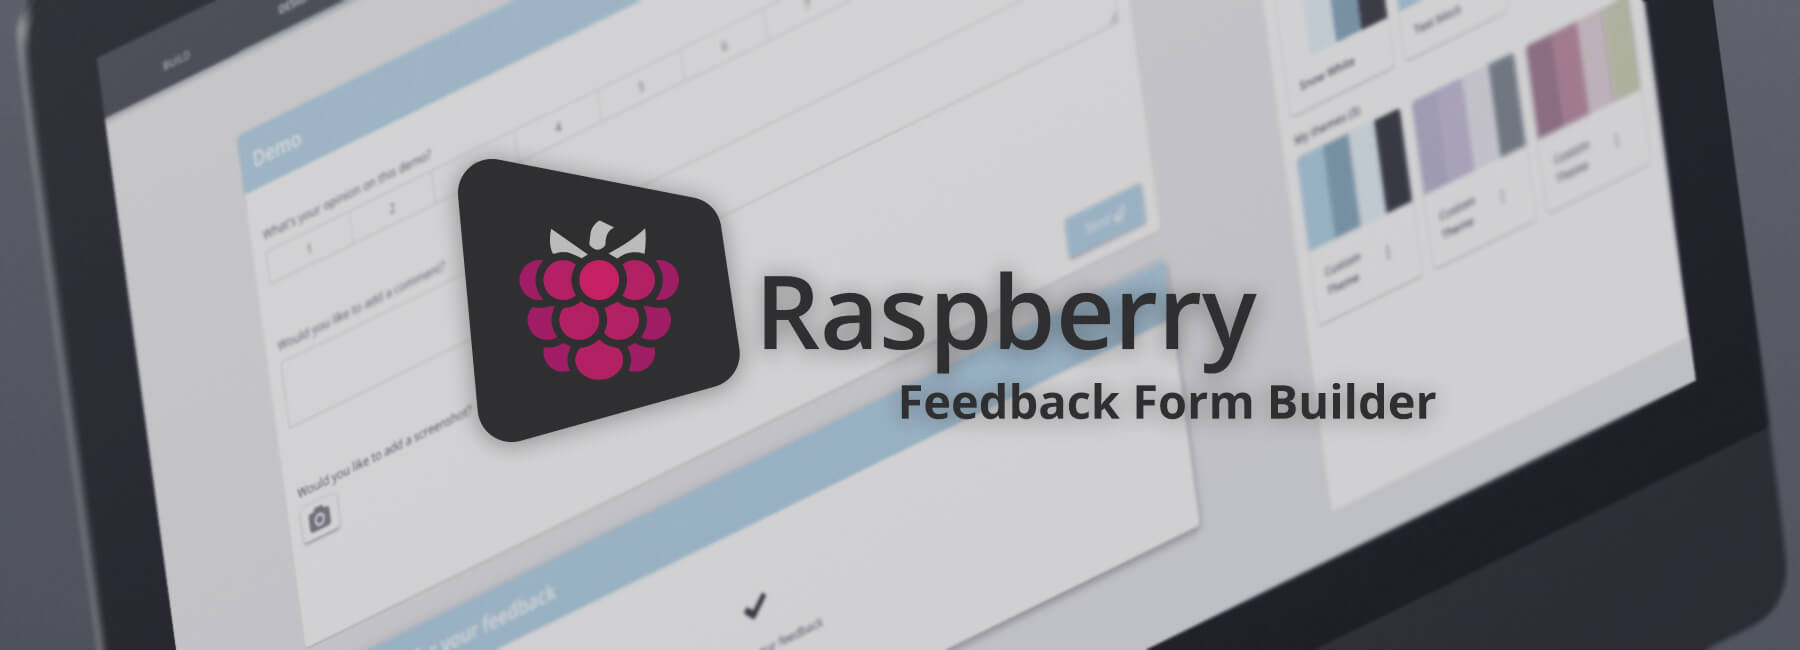 Mopinion ‘Raspberry’ (Deel 2): Feedback Form Builder